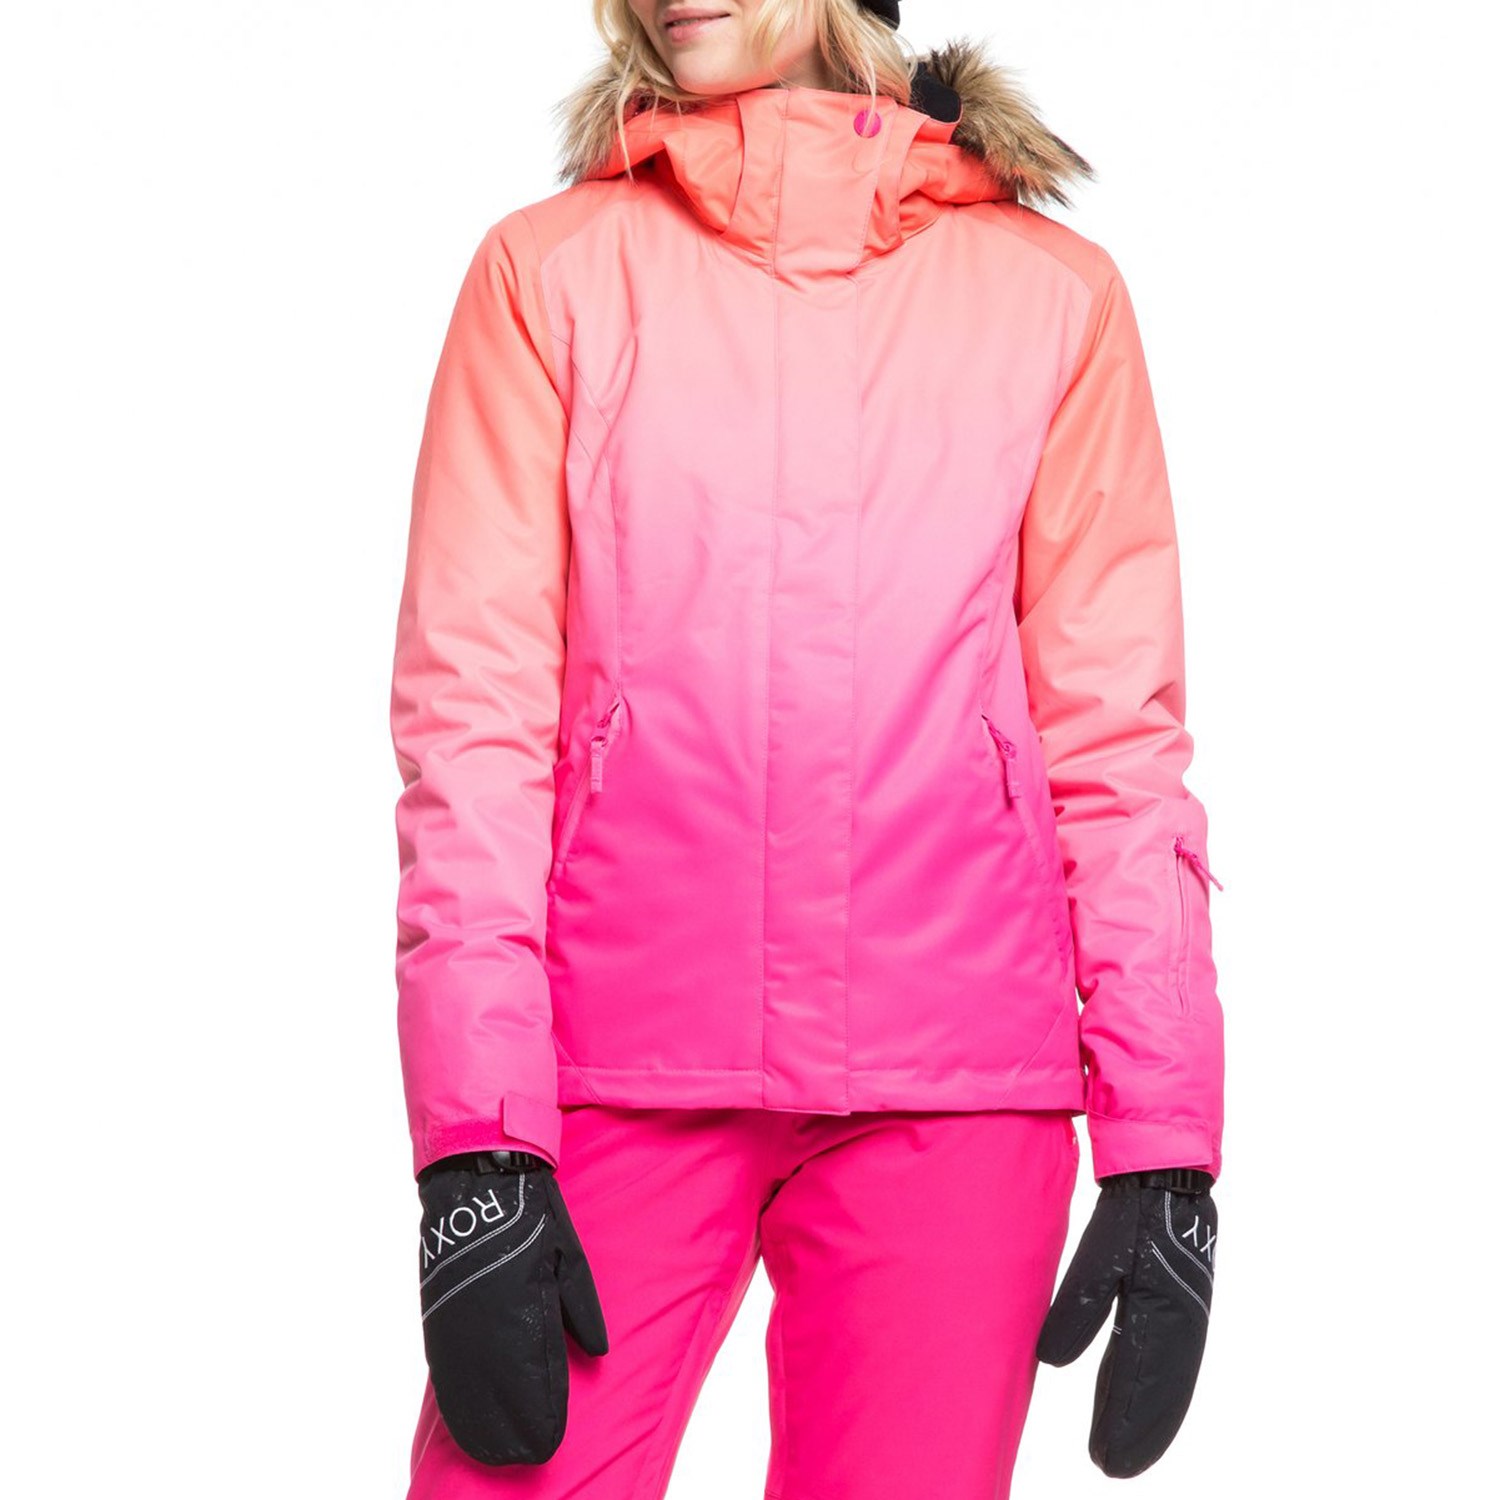 Roxy куртка розовая. Куртка Roxy Jet Ski. Женская сноубордическая куртка Jet Ski. Куртки Рокси сноубордические женские. Roxy куртка сноубордическая женская.